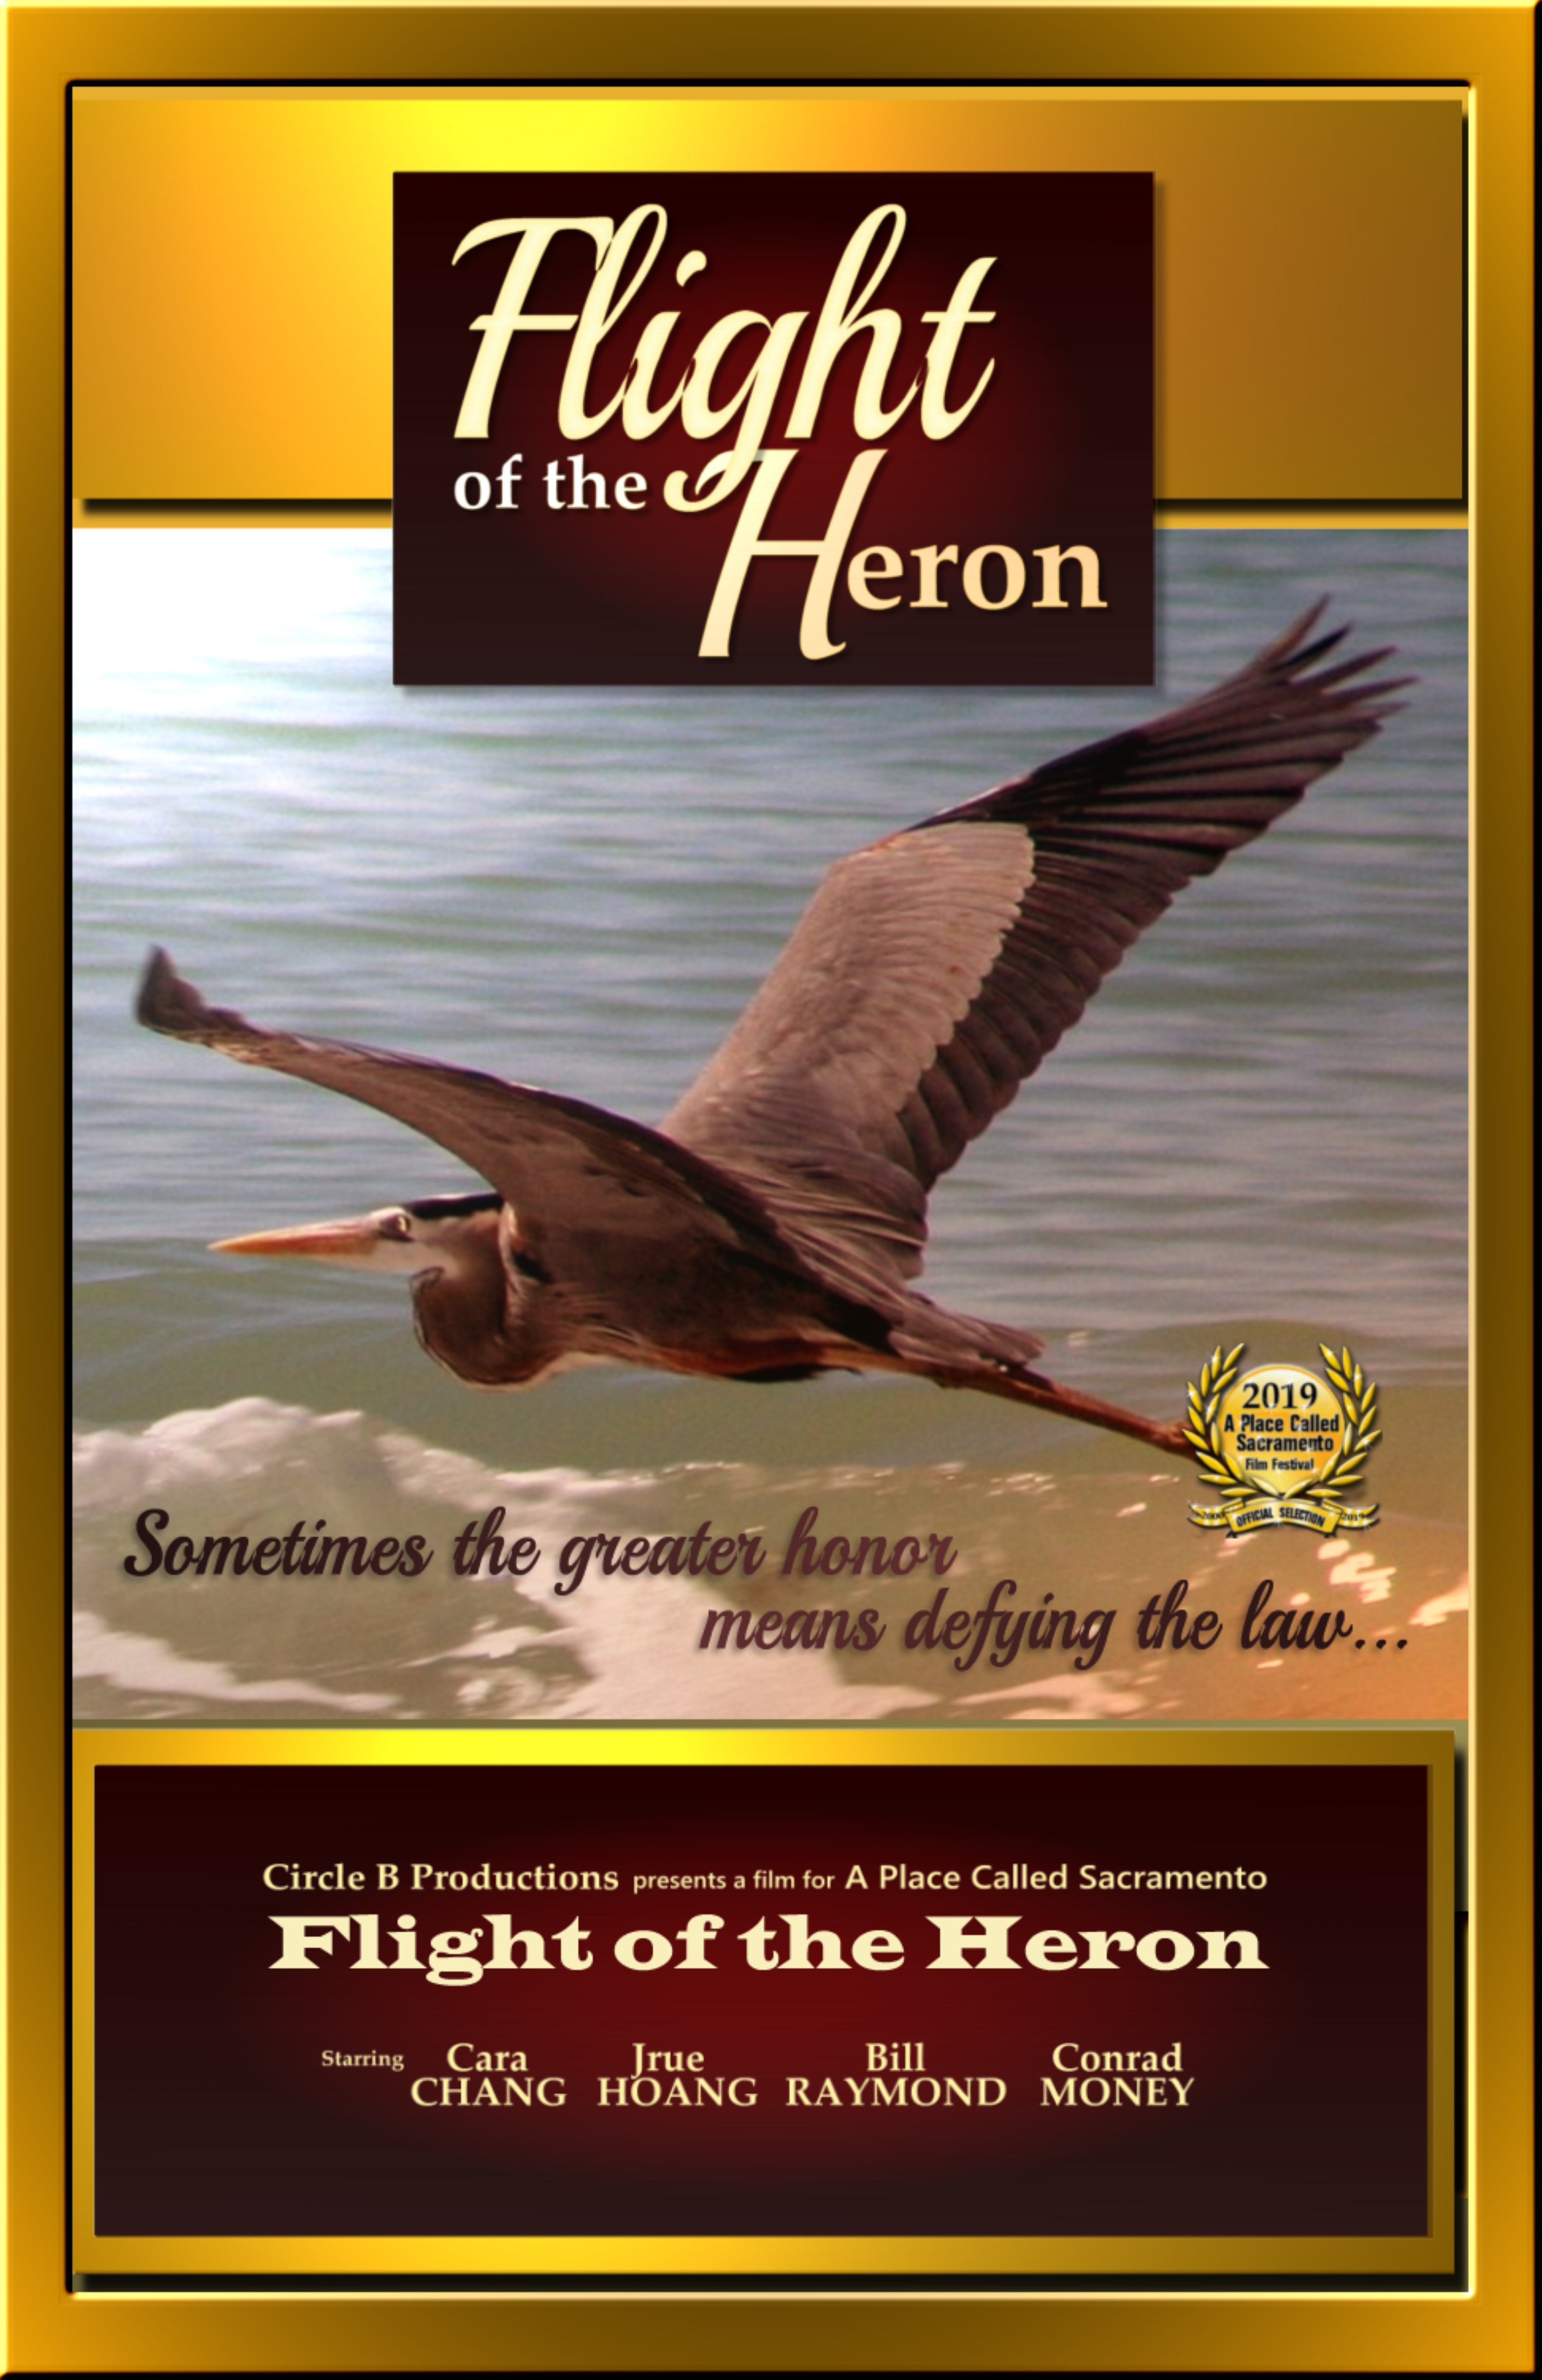 FLIGHT OF THE HERON